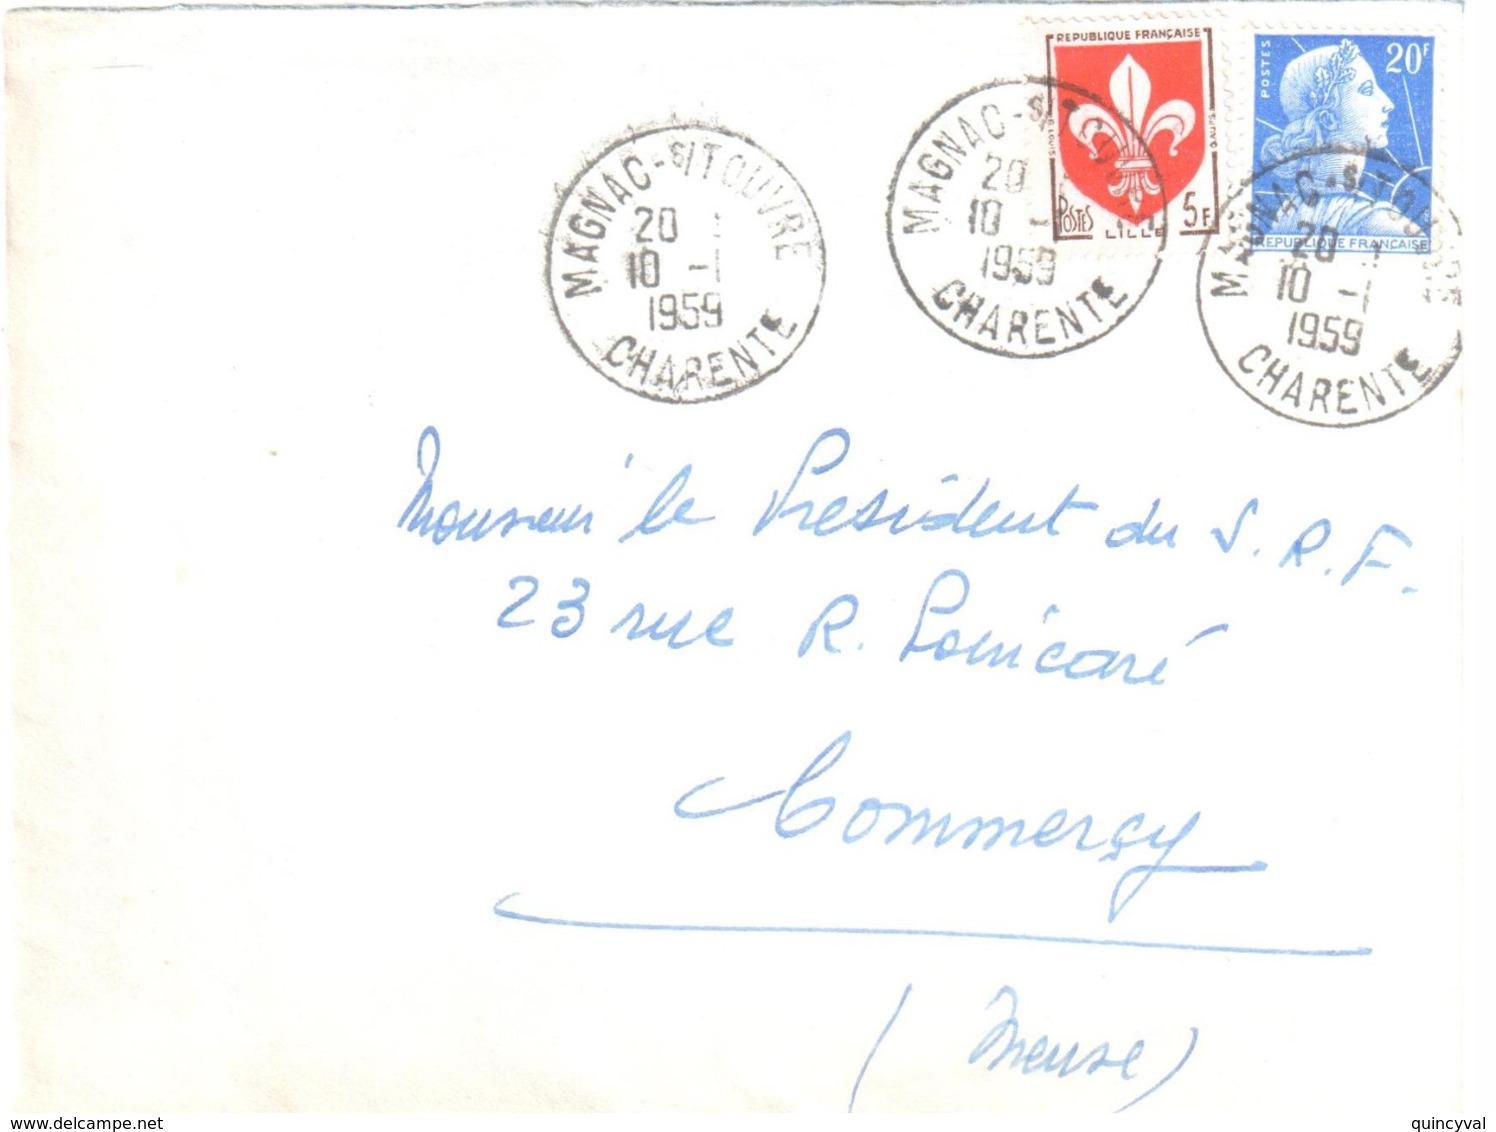 MAGNAC Sur TOUVRE Charente Lettre 20 F Muller 5 F Blason Lille Yv 1011B 1186 Ob 10 1 1959 Dest Commercy Meuse - Covers & Documents